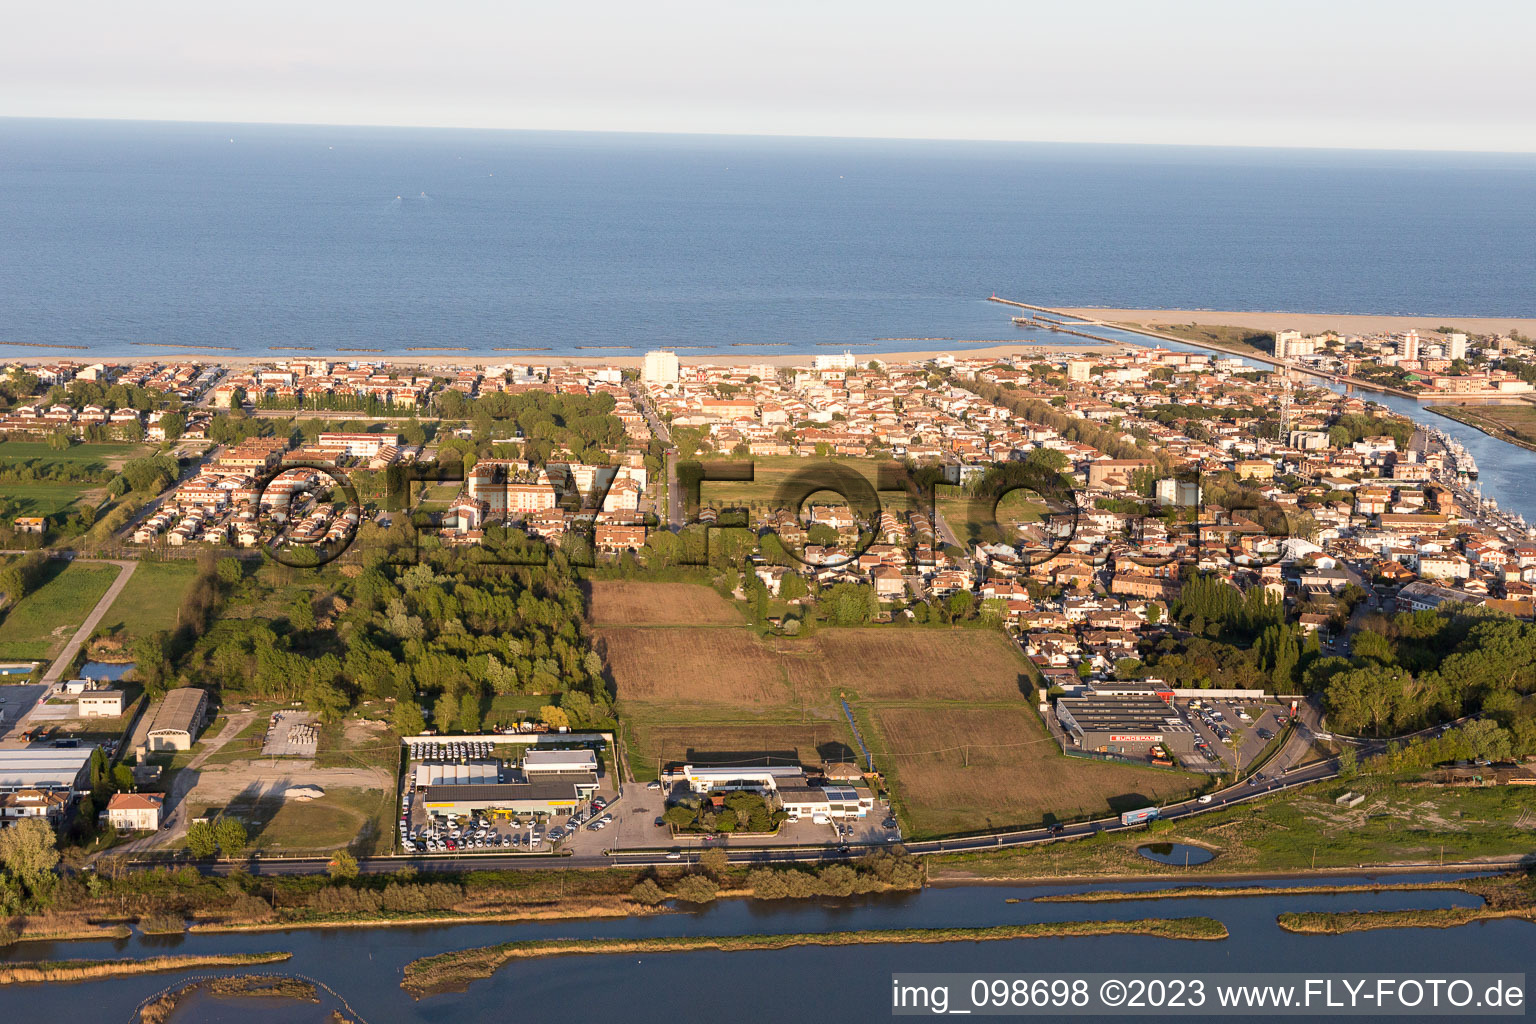 Schrägluftbild von Porto Garibaldi im Bundesland Emilia-Romagna, Italien